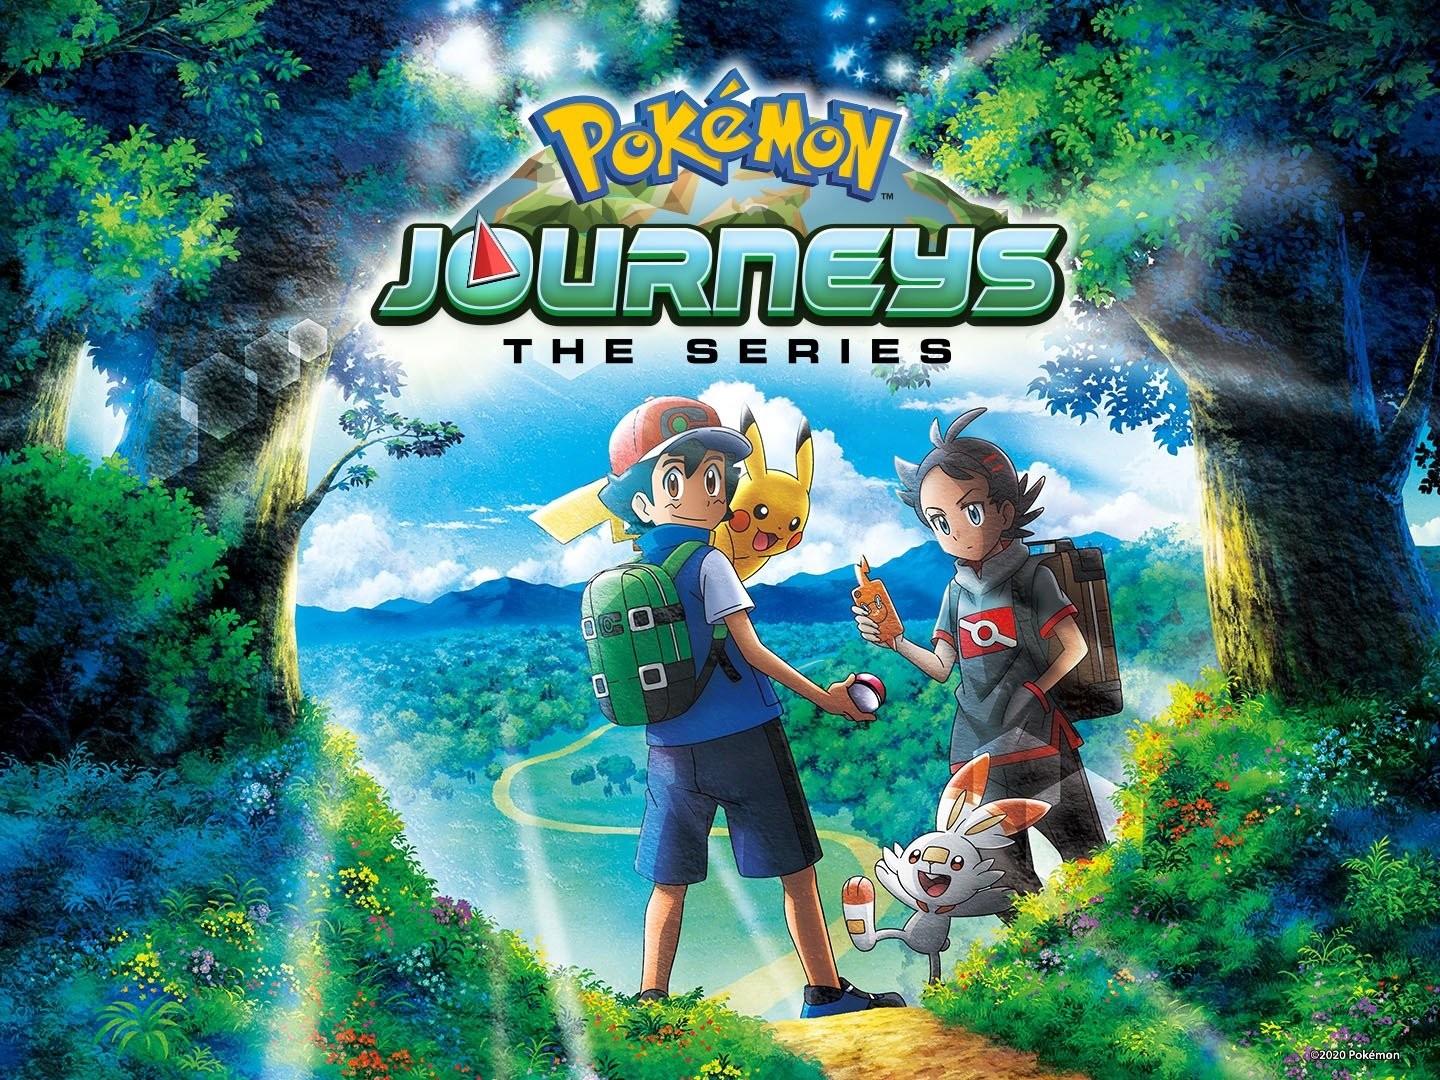 How to Watch Pokémon Master Journeys: The Series Part 3 on Netflix